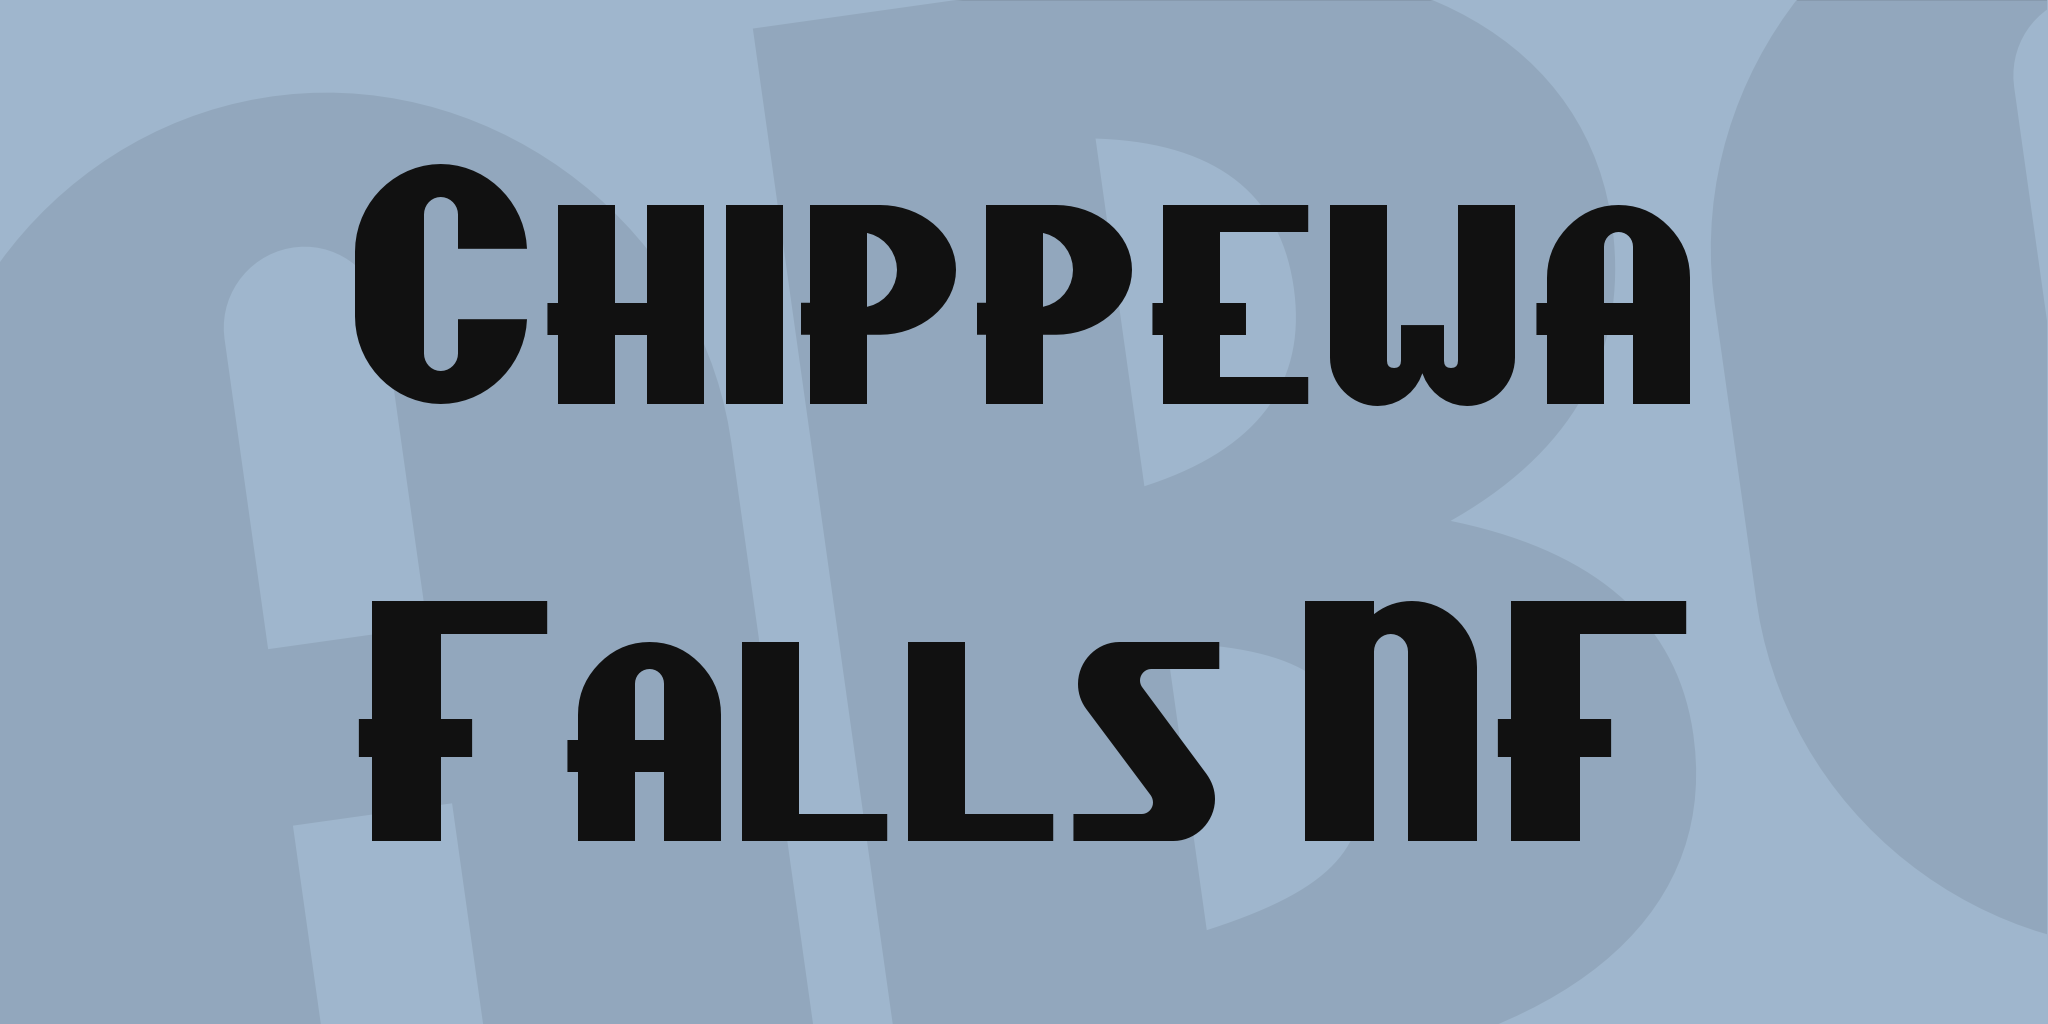 Chippewa Falls Nf